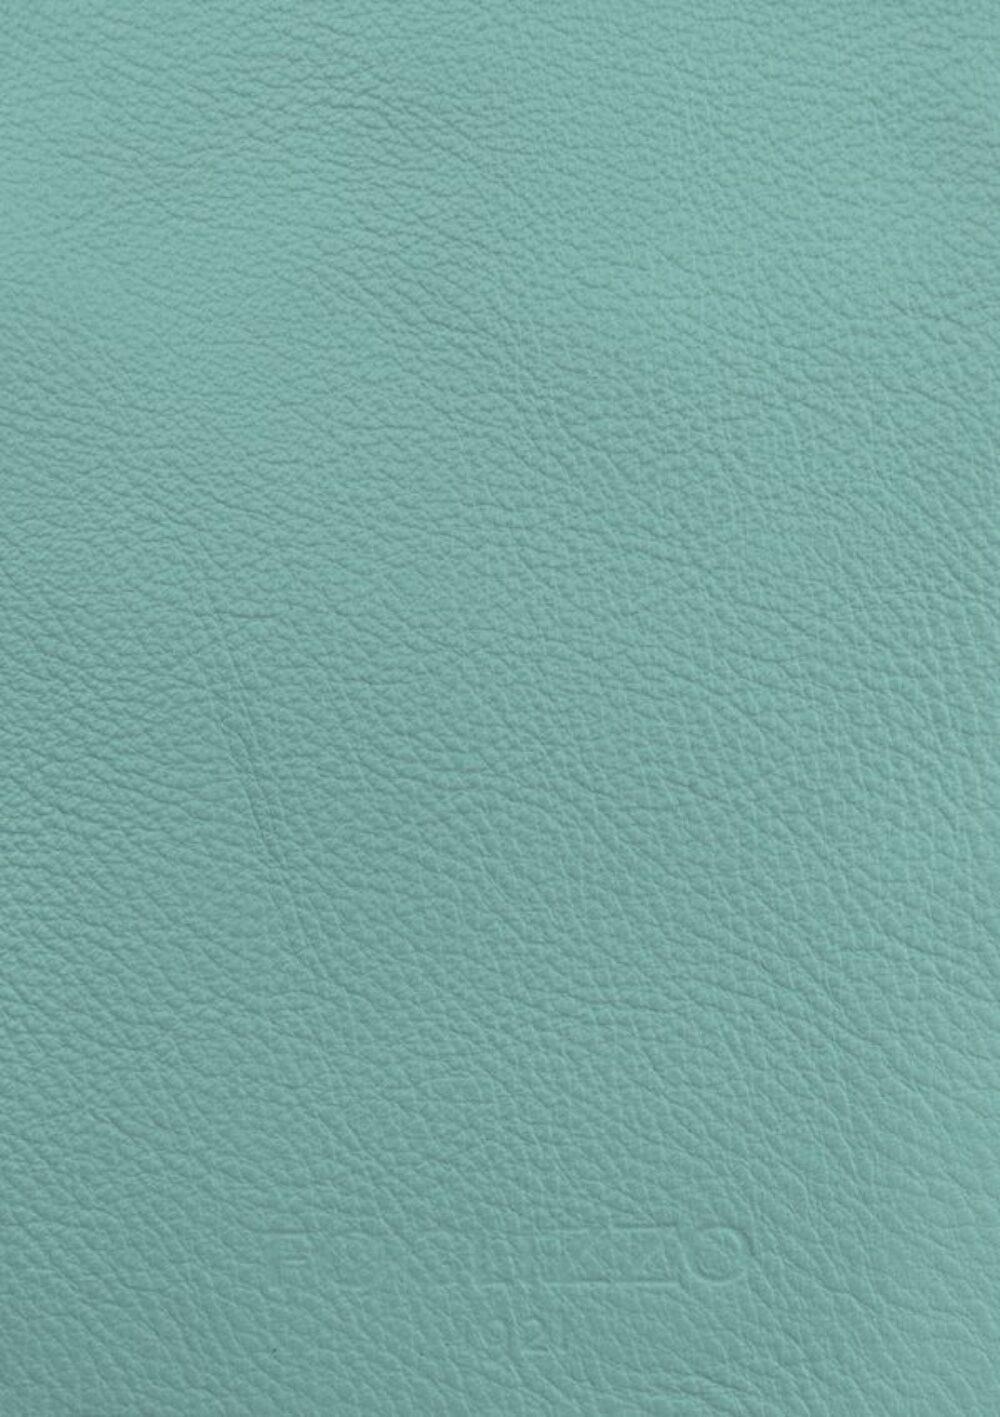 Tapis de luxe design et haut de gamme sur mesure • Marine Blue Green Jade